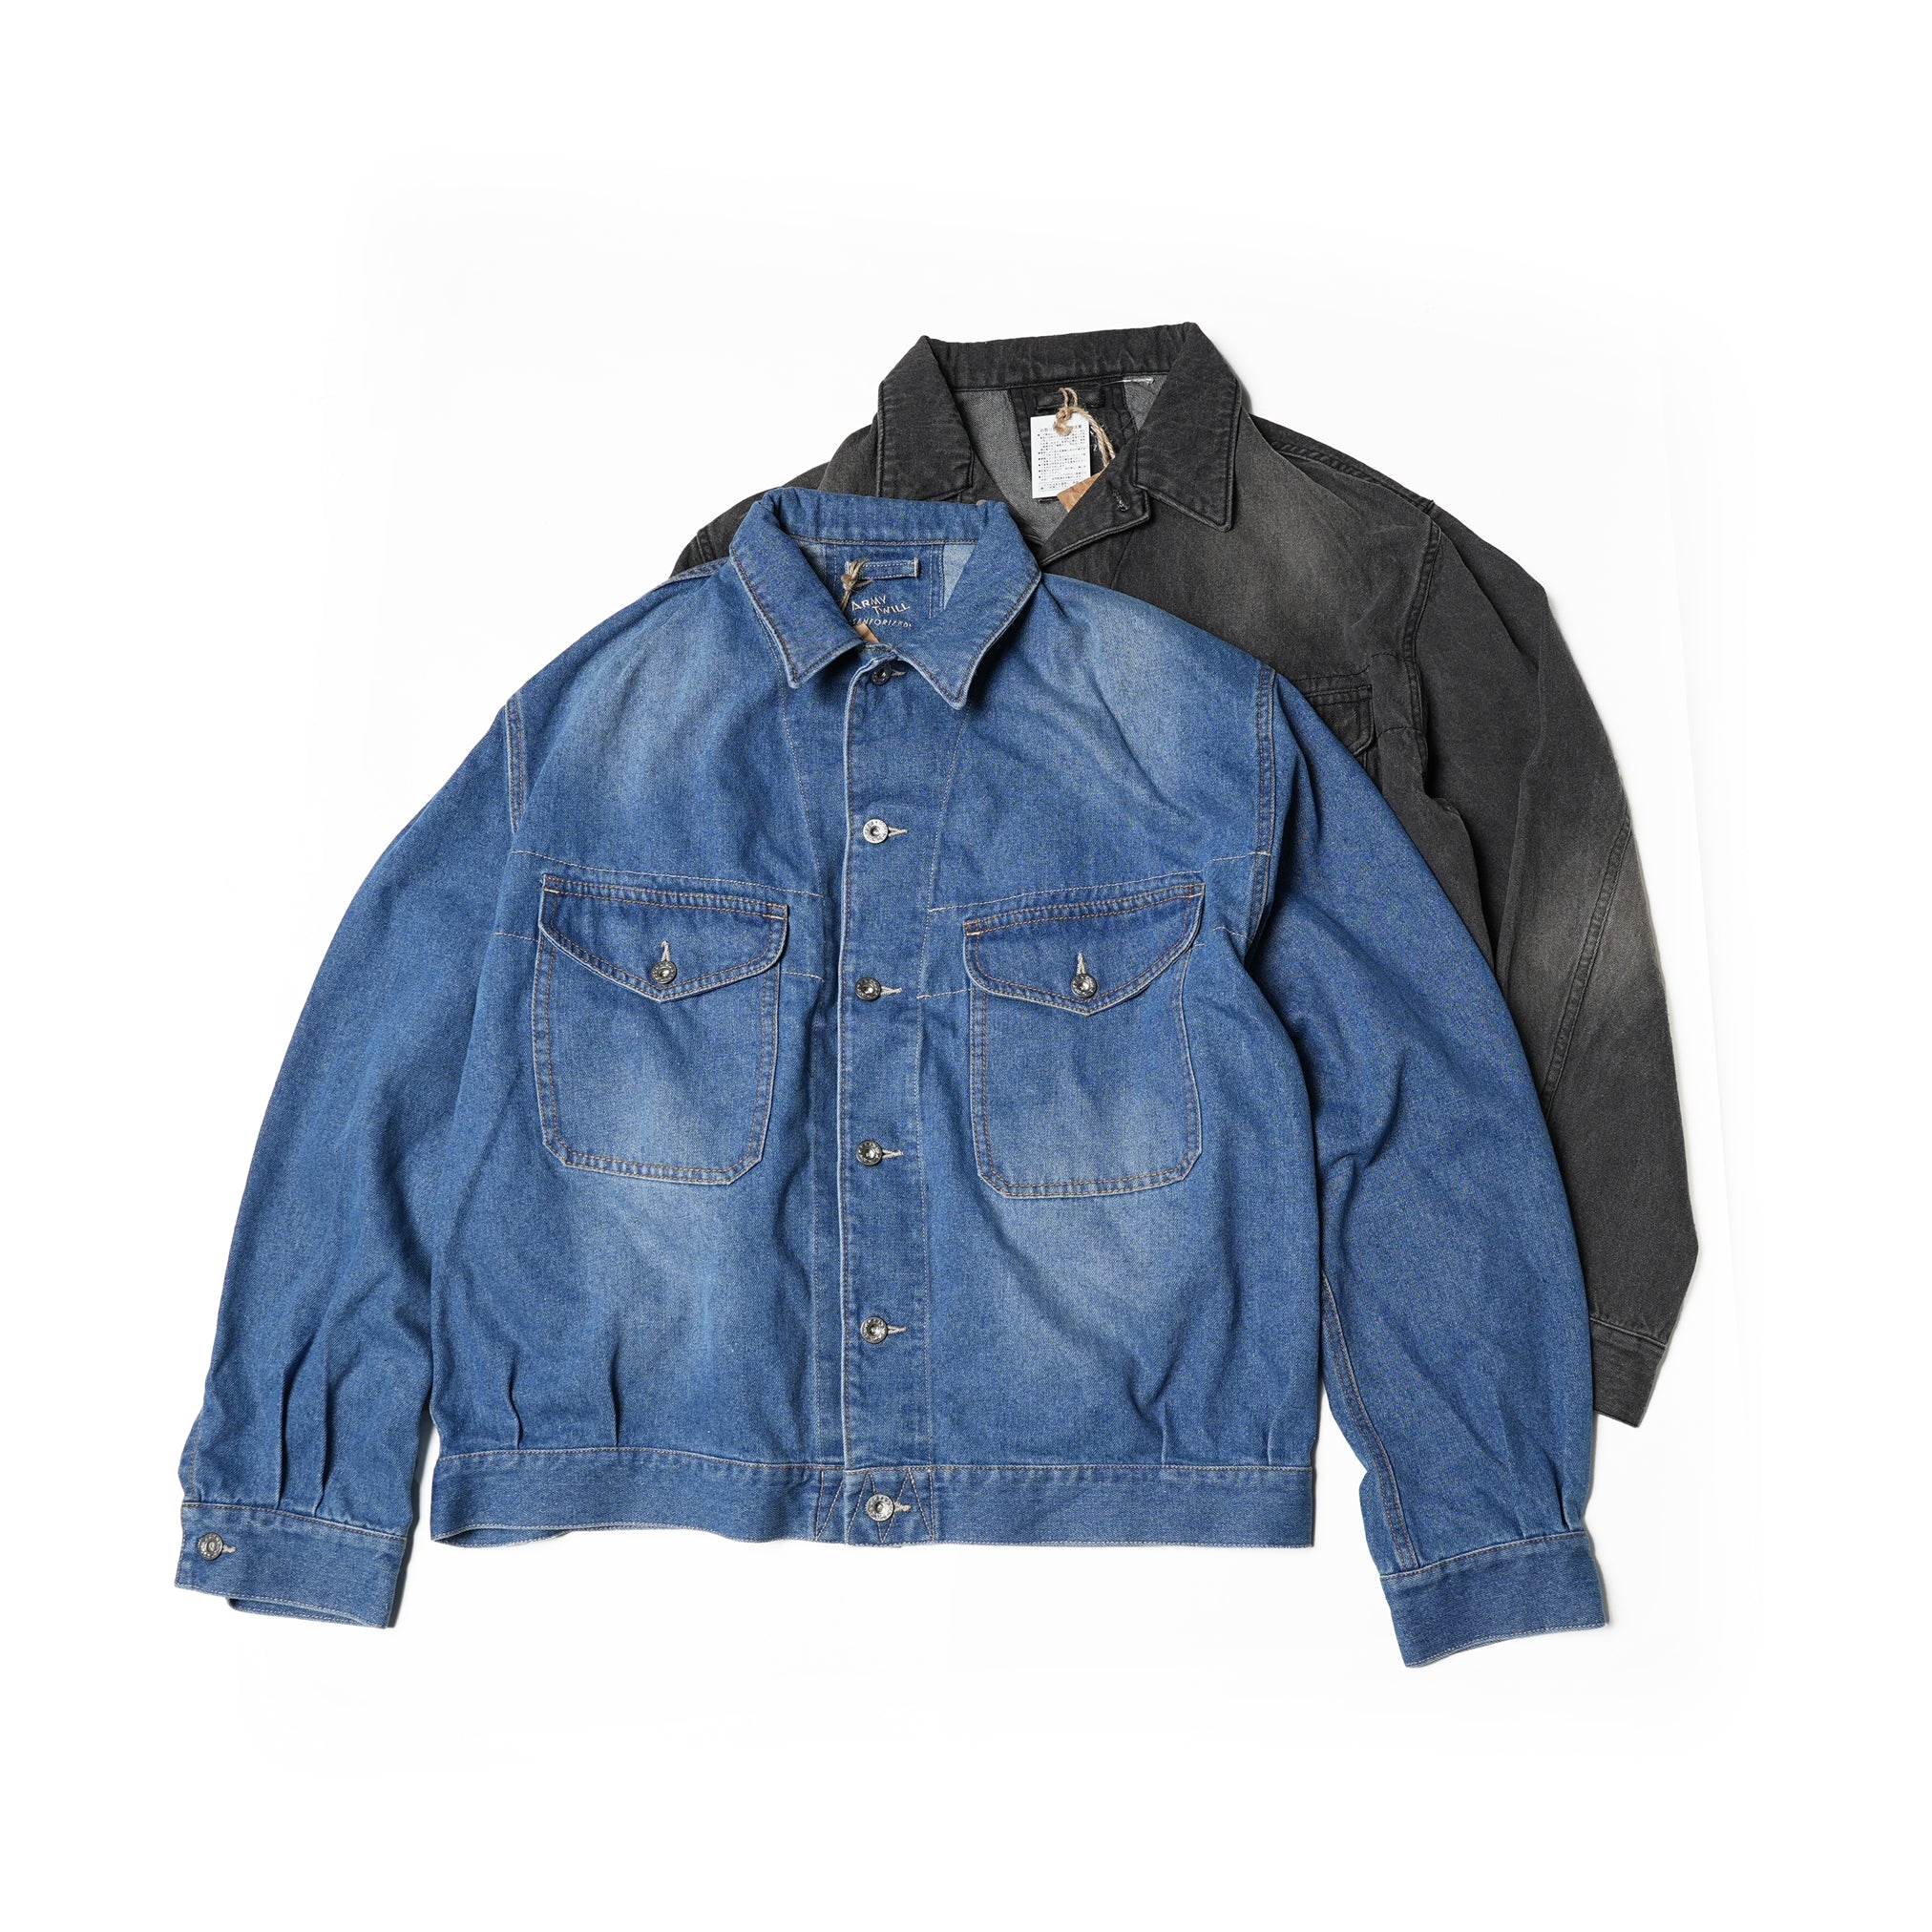 No:AM-2414005 | Name:10OZ Denim Jacket | Color:Blue/Charcoal【ARMYTWILL_アーミーツイル】